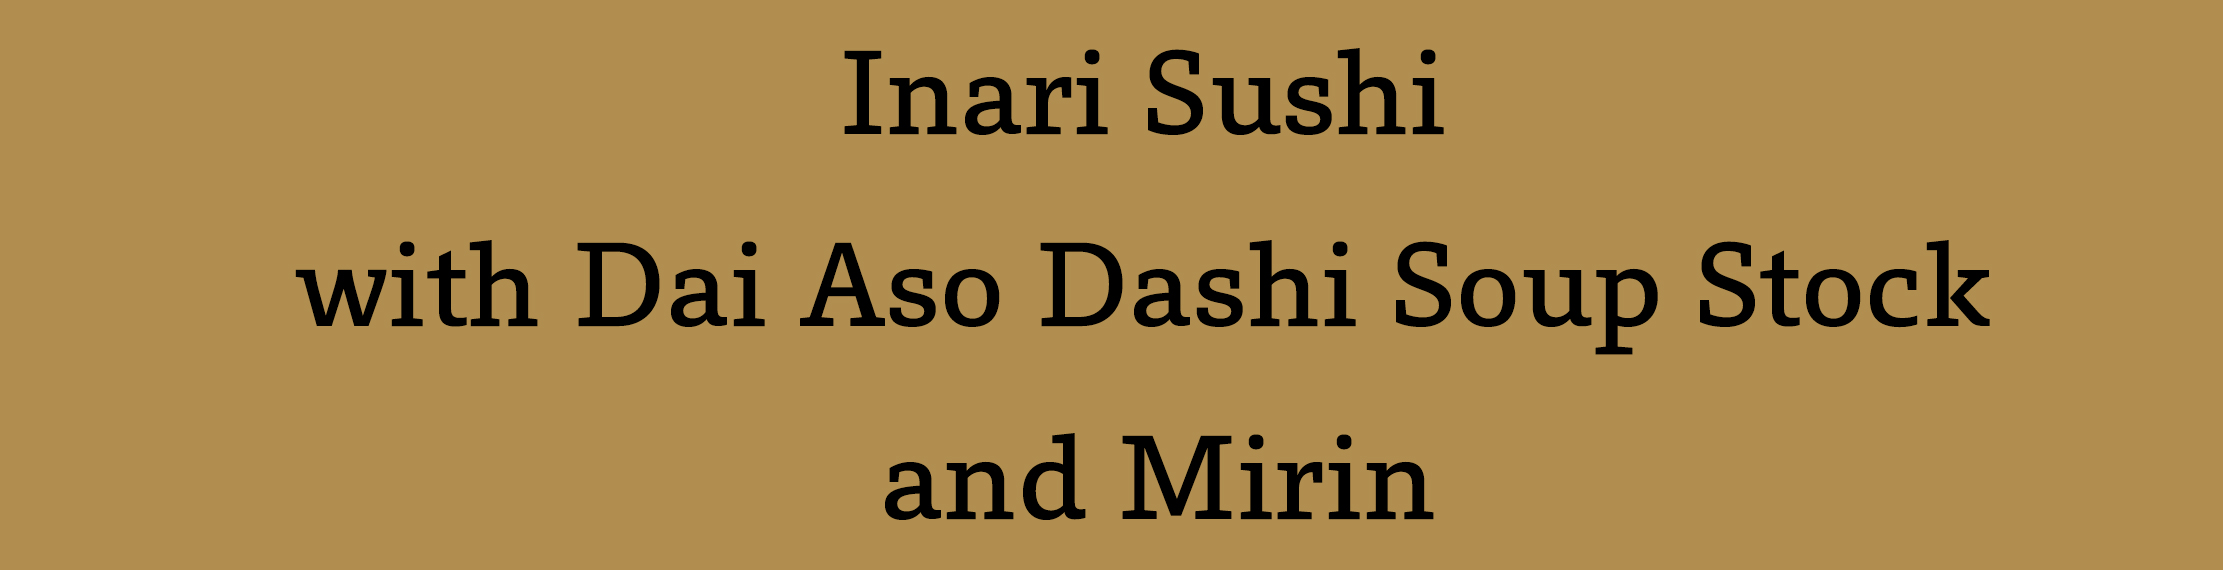 Inari Sushi with Dai Aso Dashi Soup Stock and Mirin